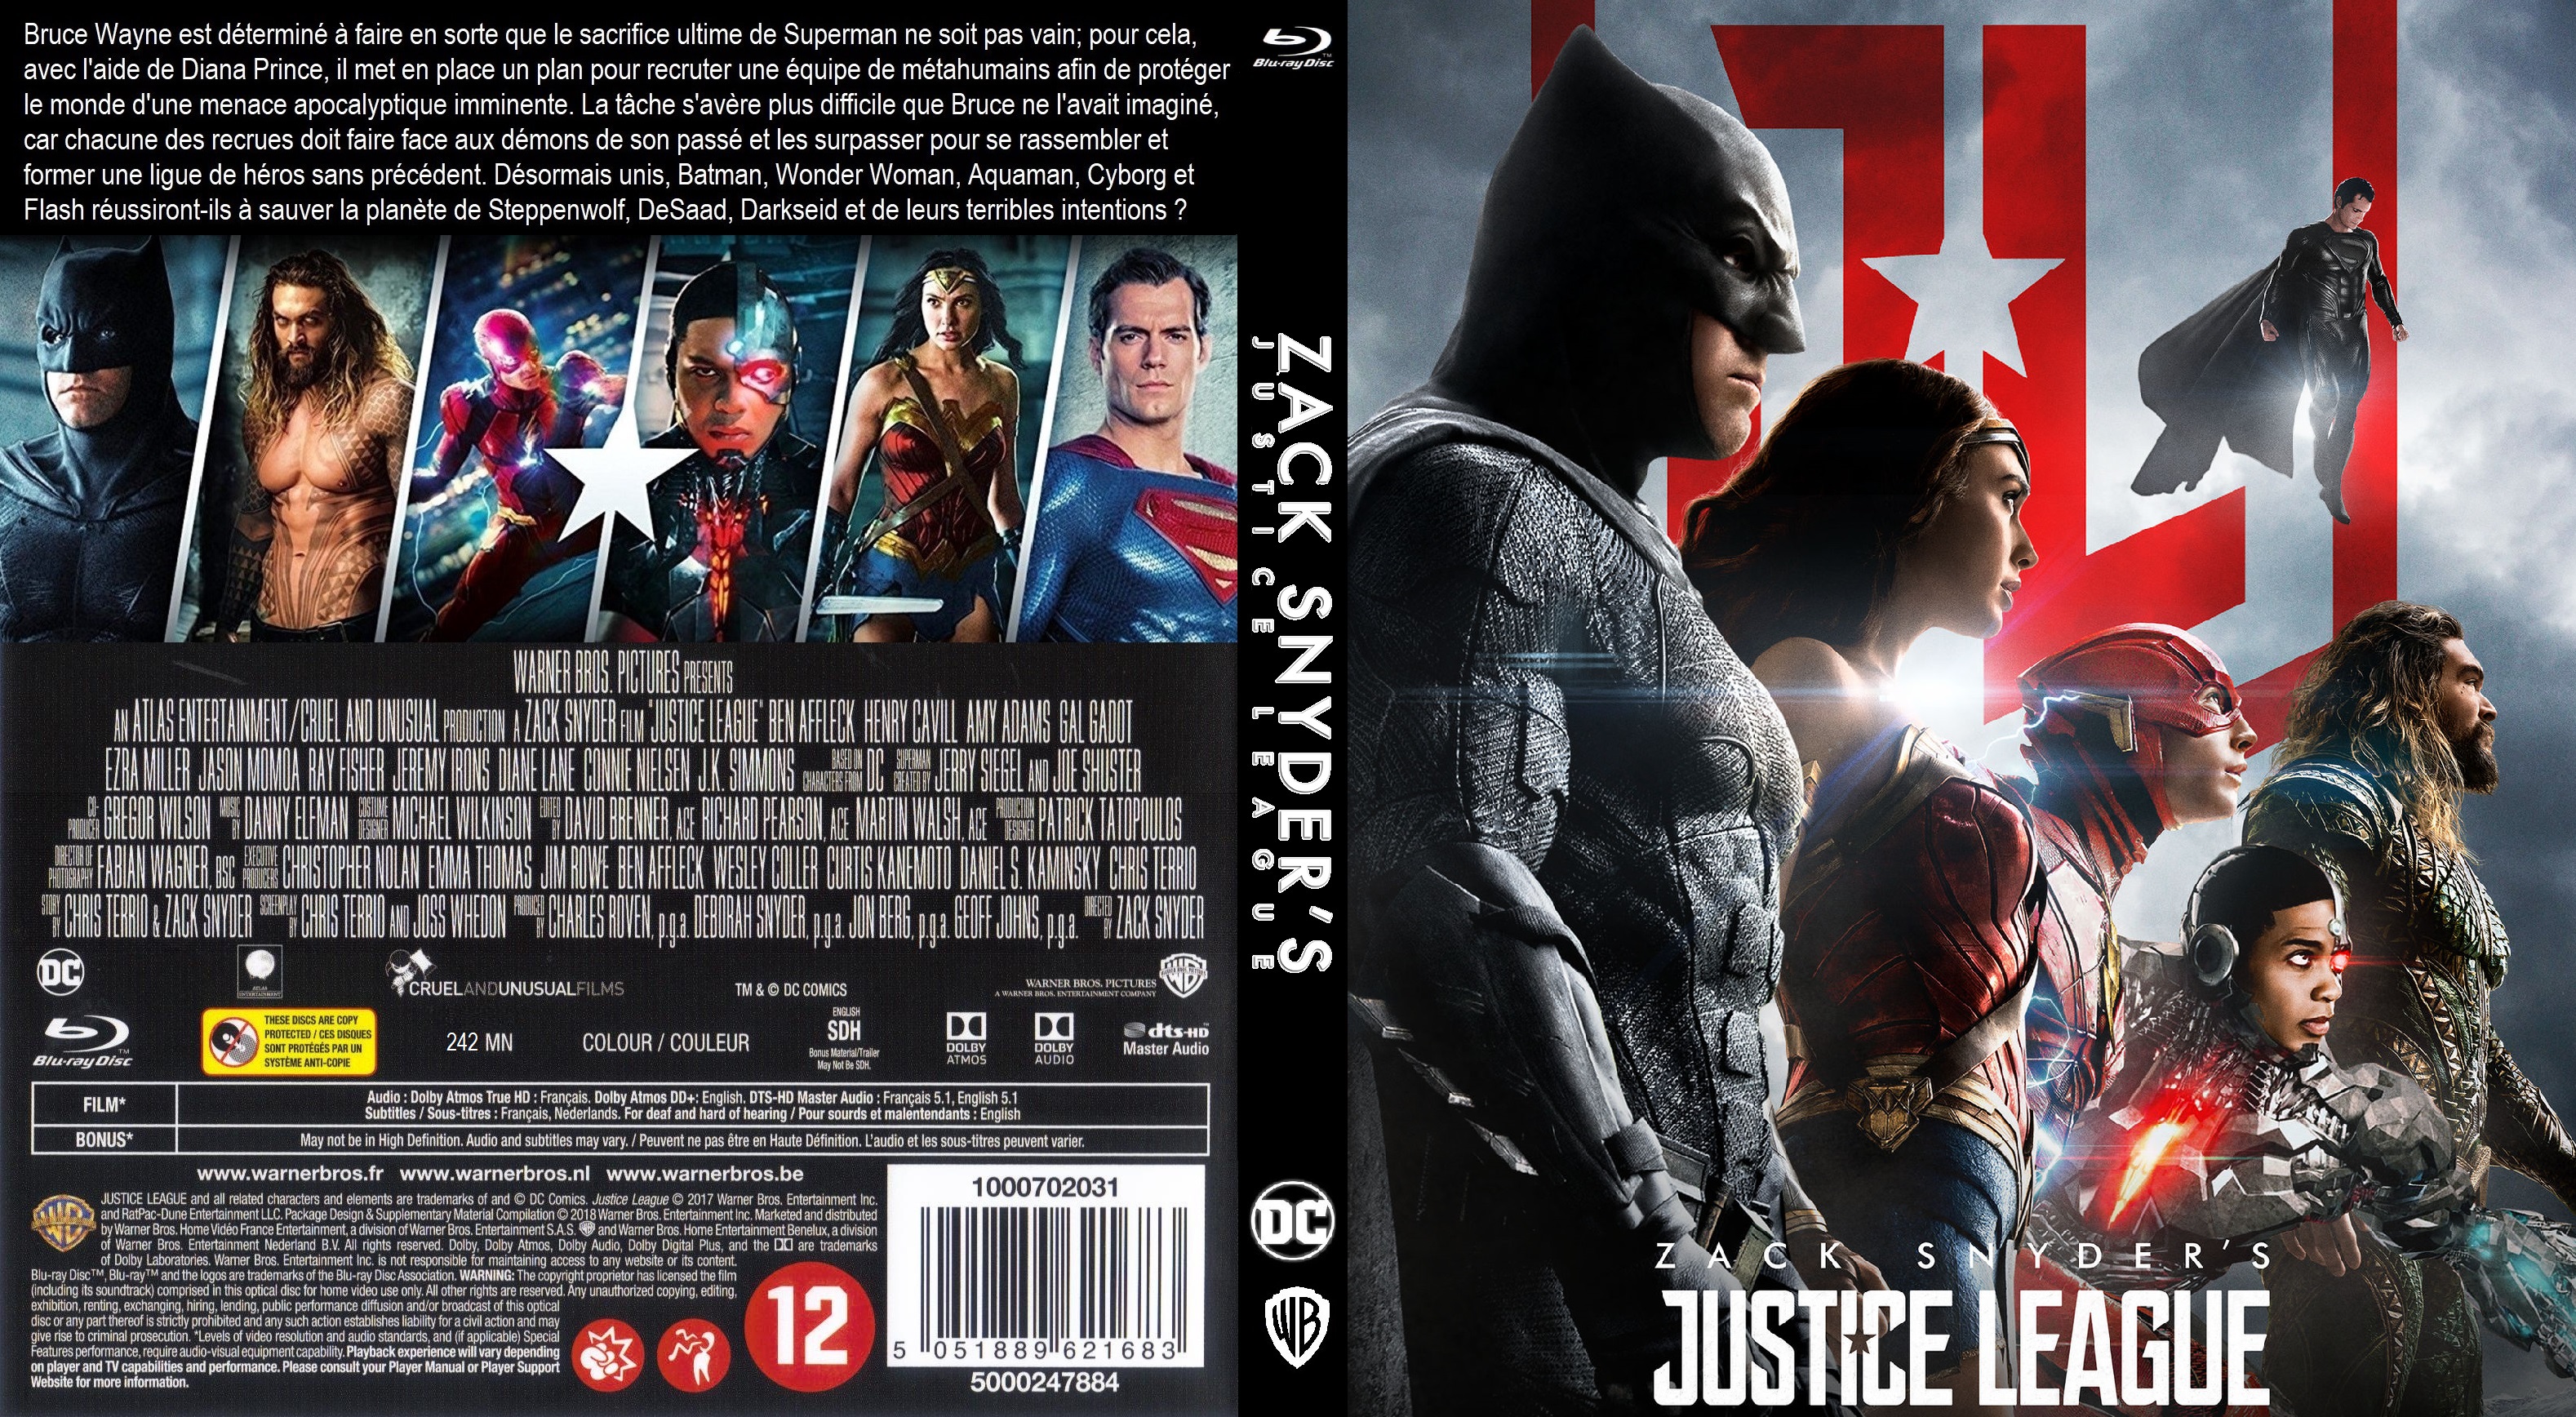 Jaquette DVD Zack Snyder